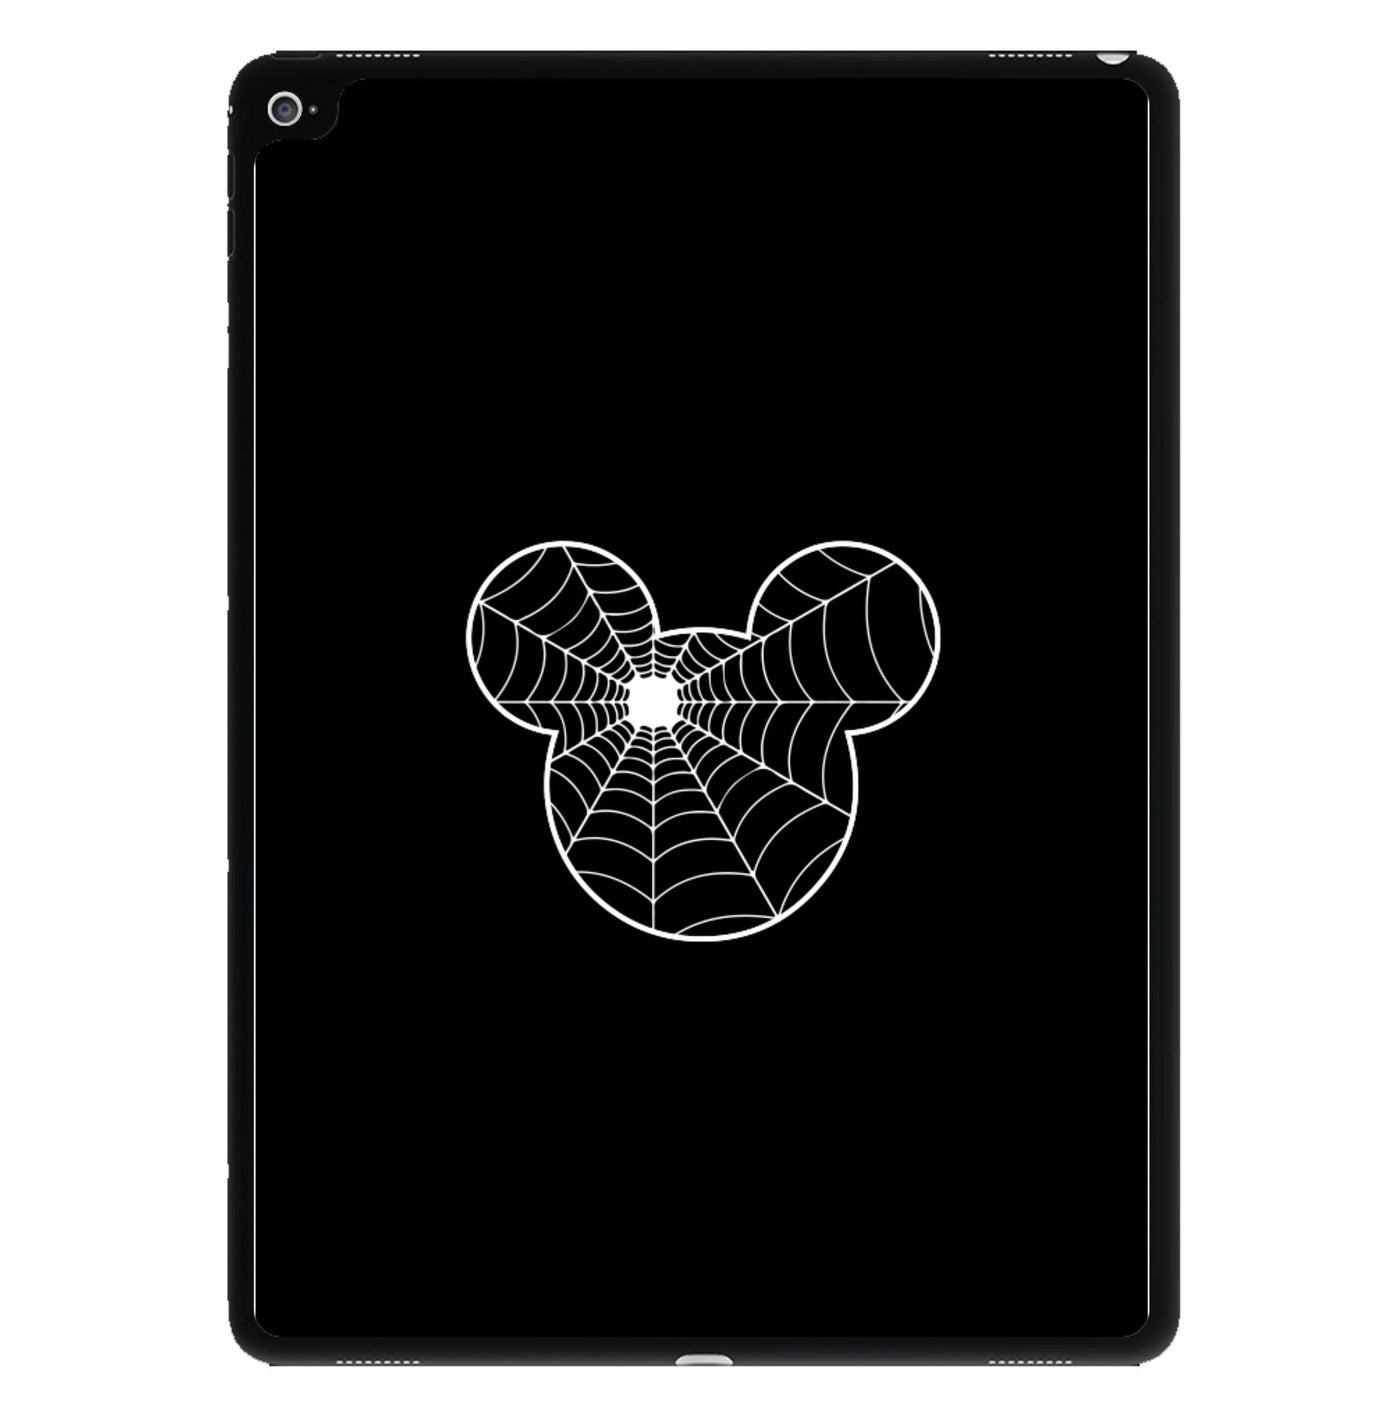 Mickey Mouse Spider Web - Halloween iPad Case